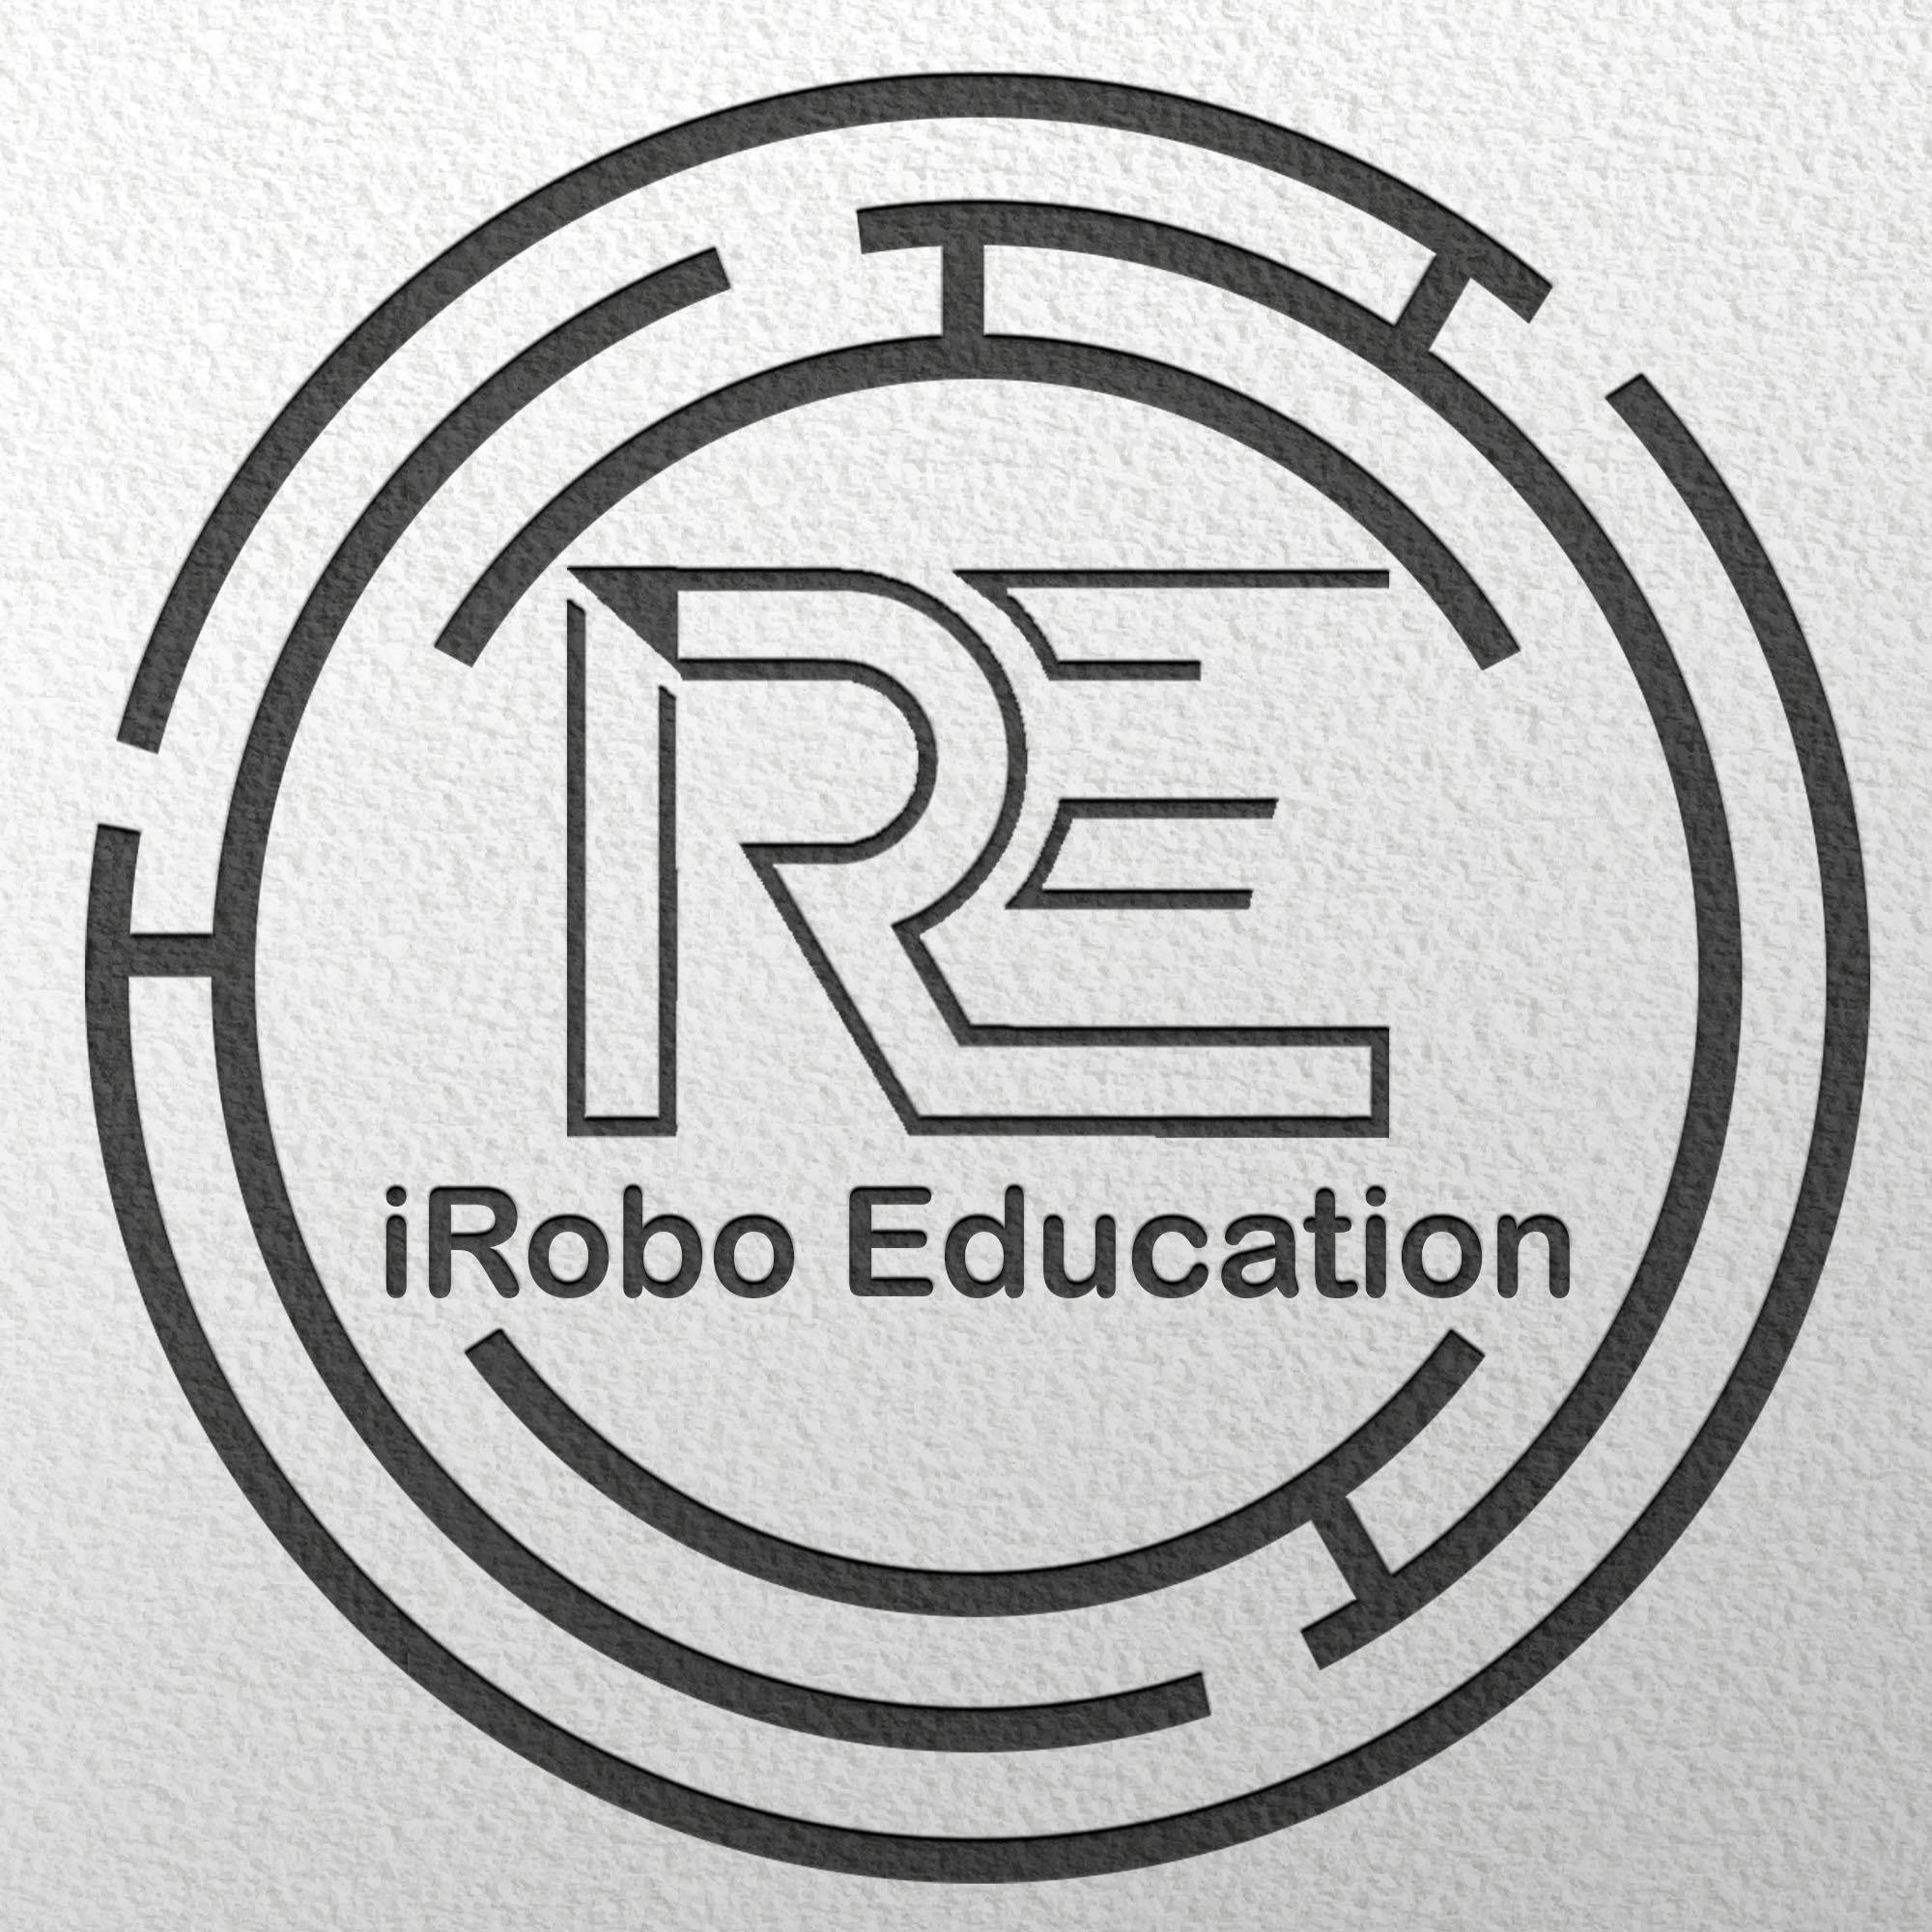 iRobo Education